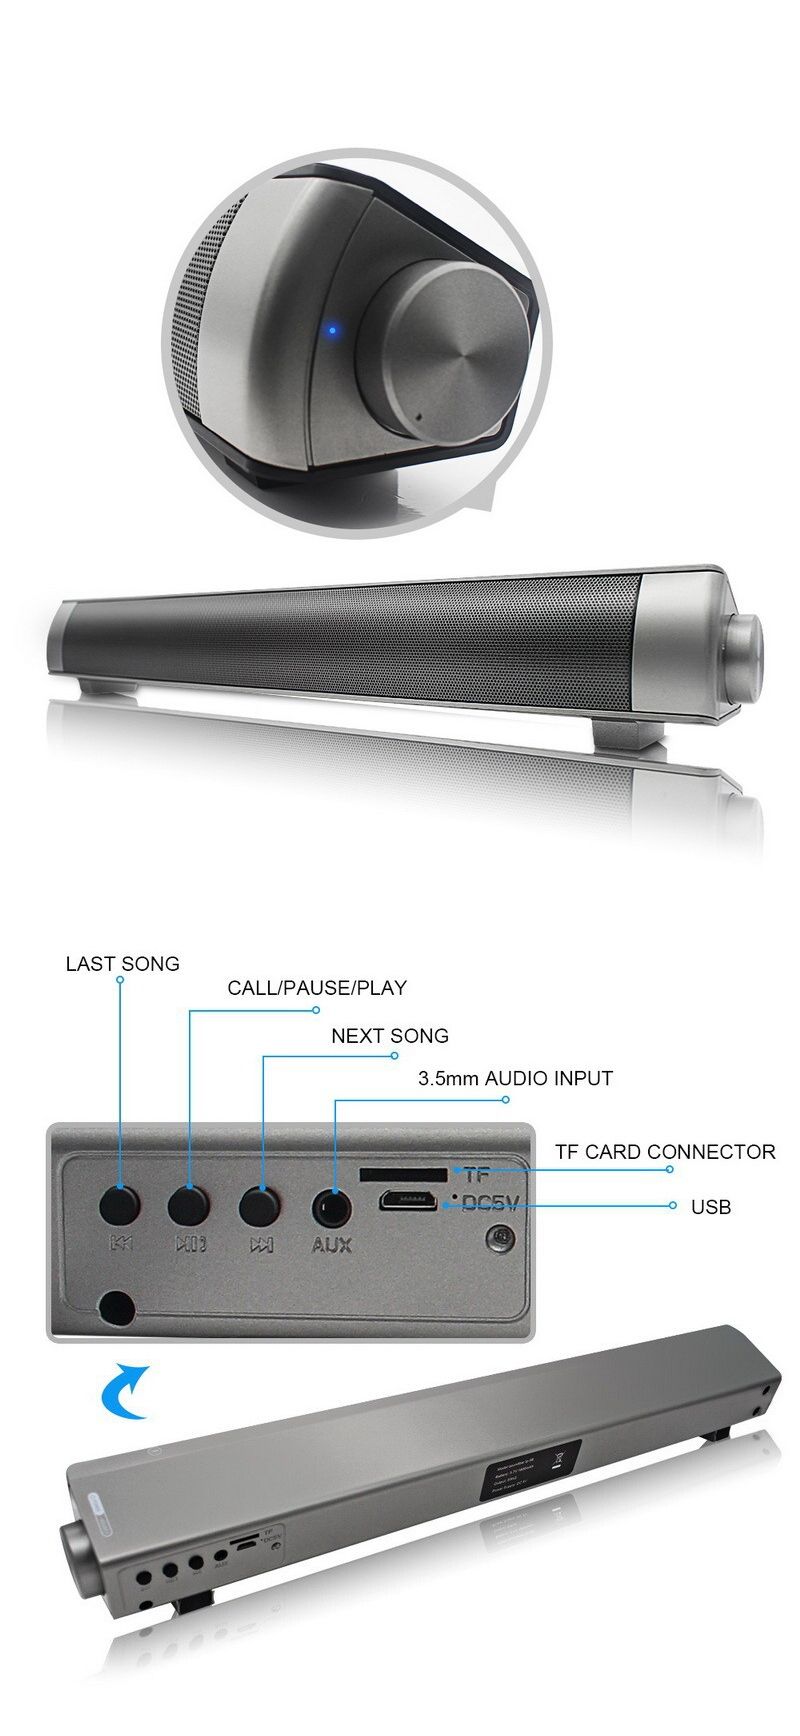 Sanwo-CE0152-Wireless-bluetooth-Speaker-LP-08-Wireless-HiFi-Stereo-Heavy-Bass-Remote-Control-bluetoo-1643307